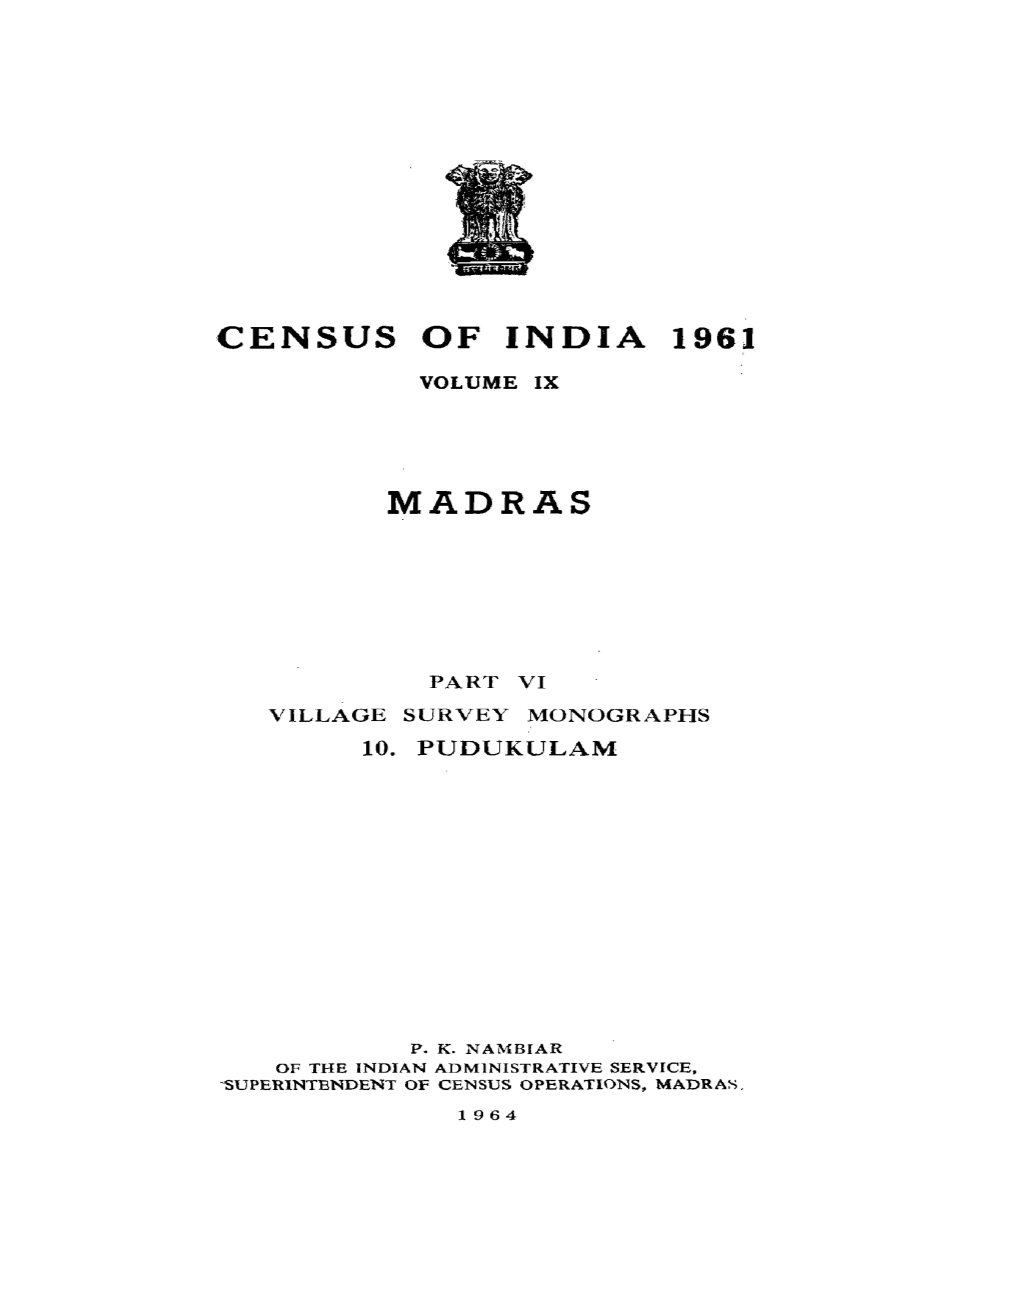 Madras- Village Survey Monographs, 10